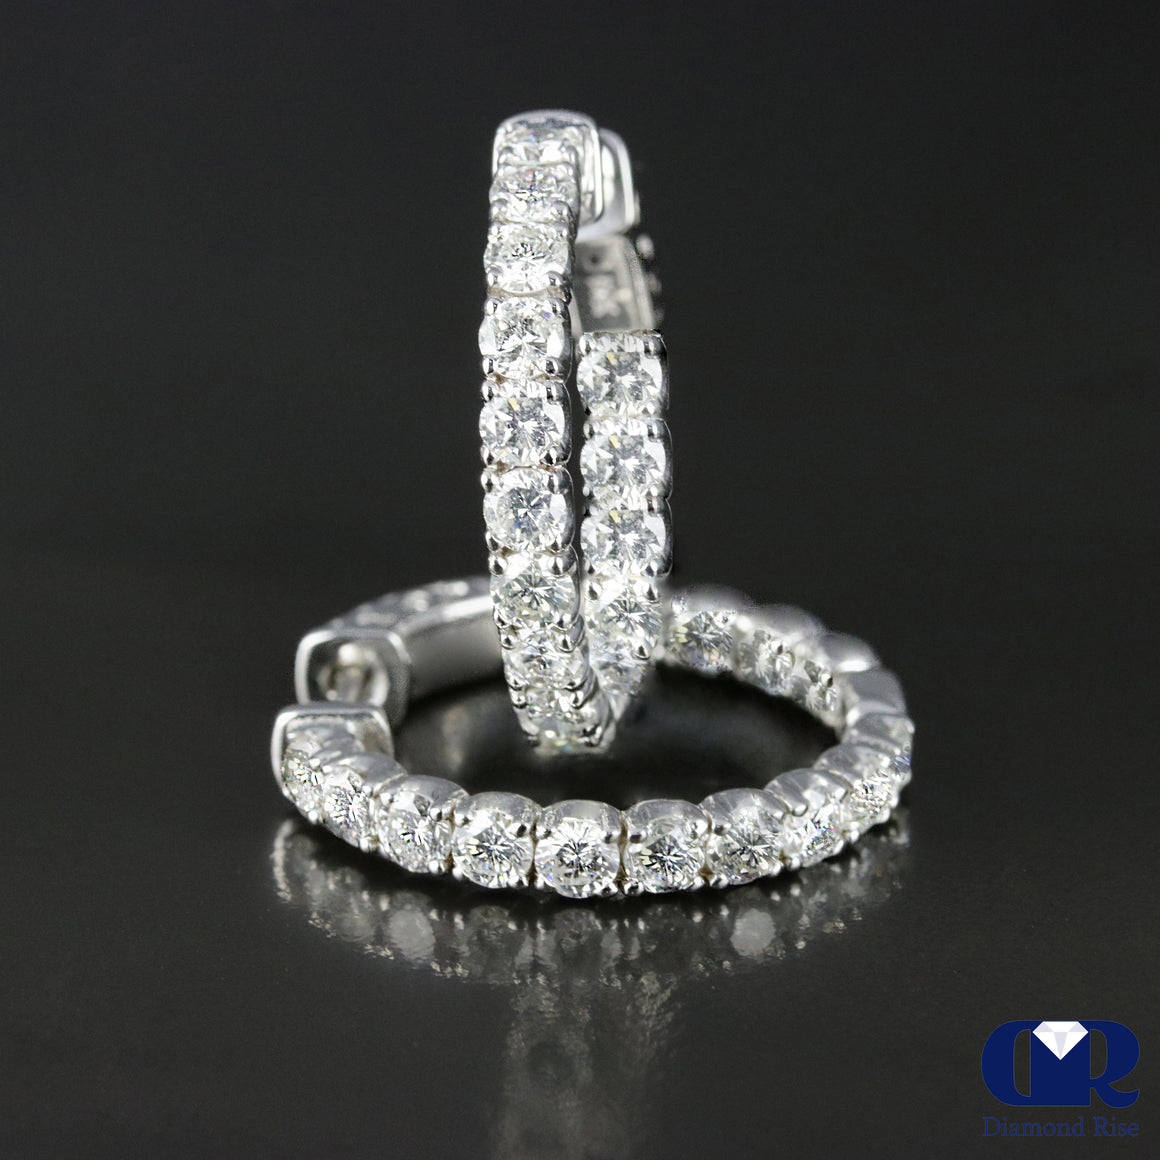 3.60 Carat Diamond Hoop Earrings 14K White Gold 1" - Diamond Rise Jewelry